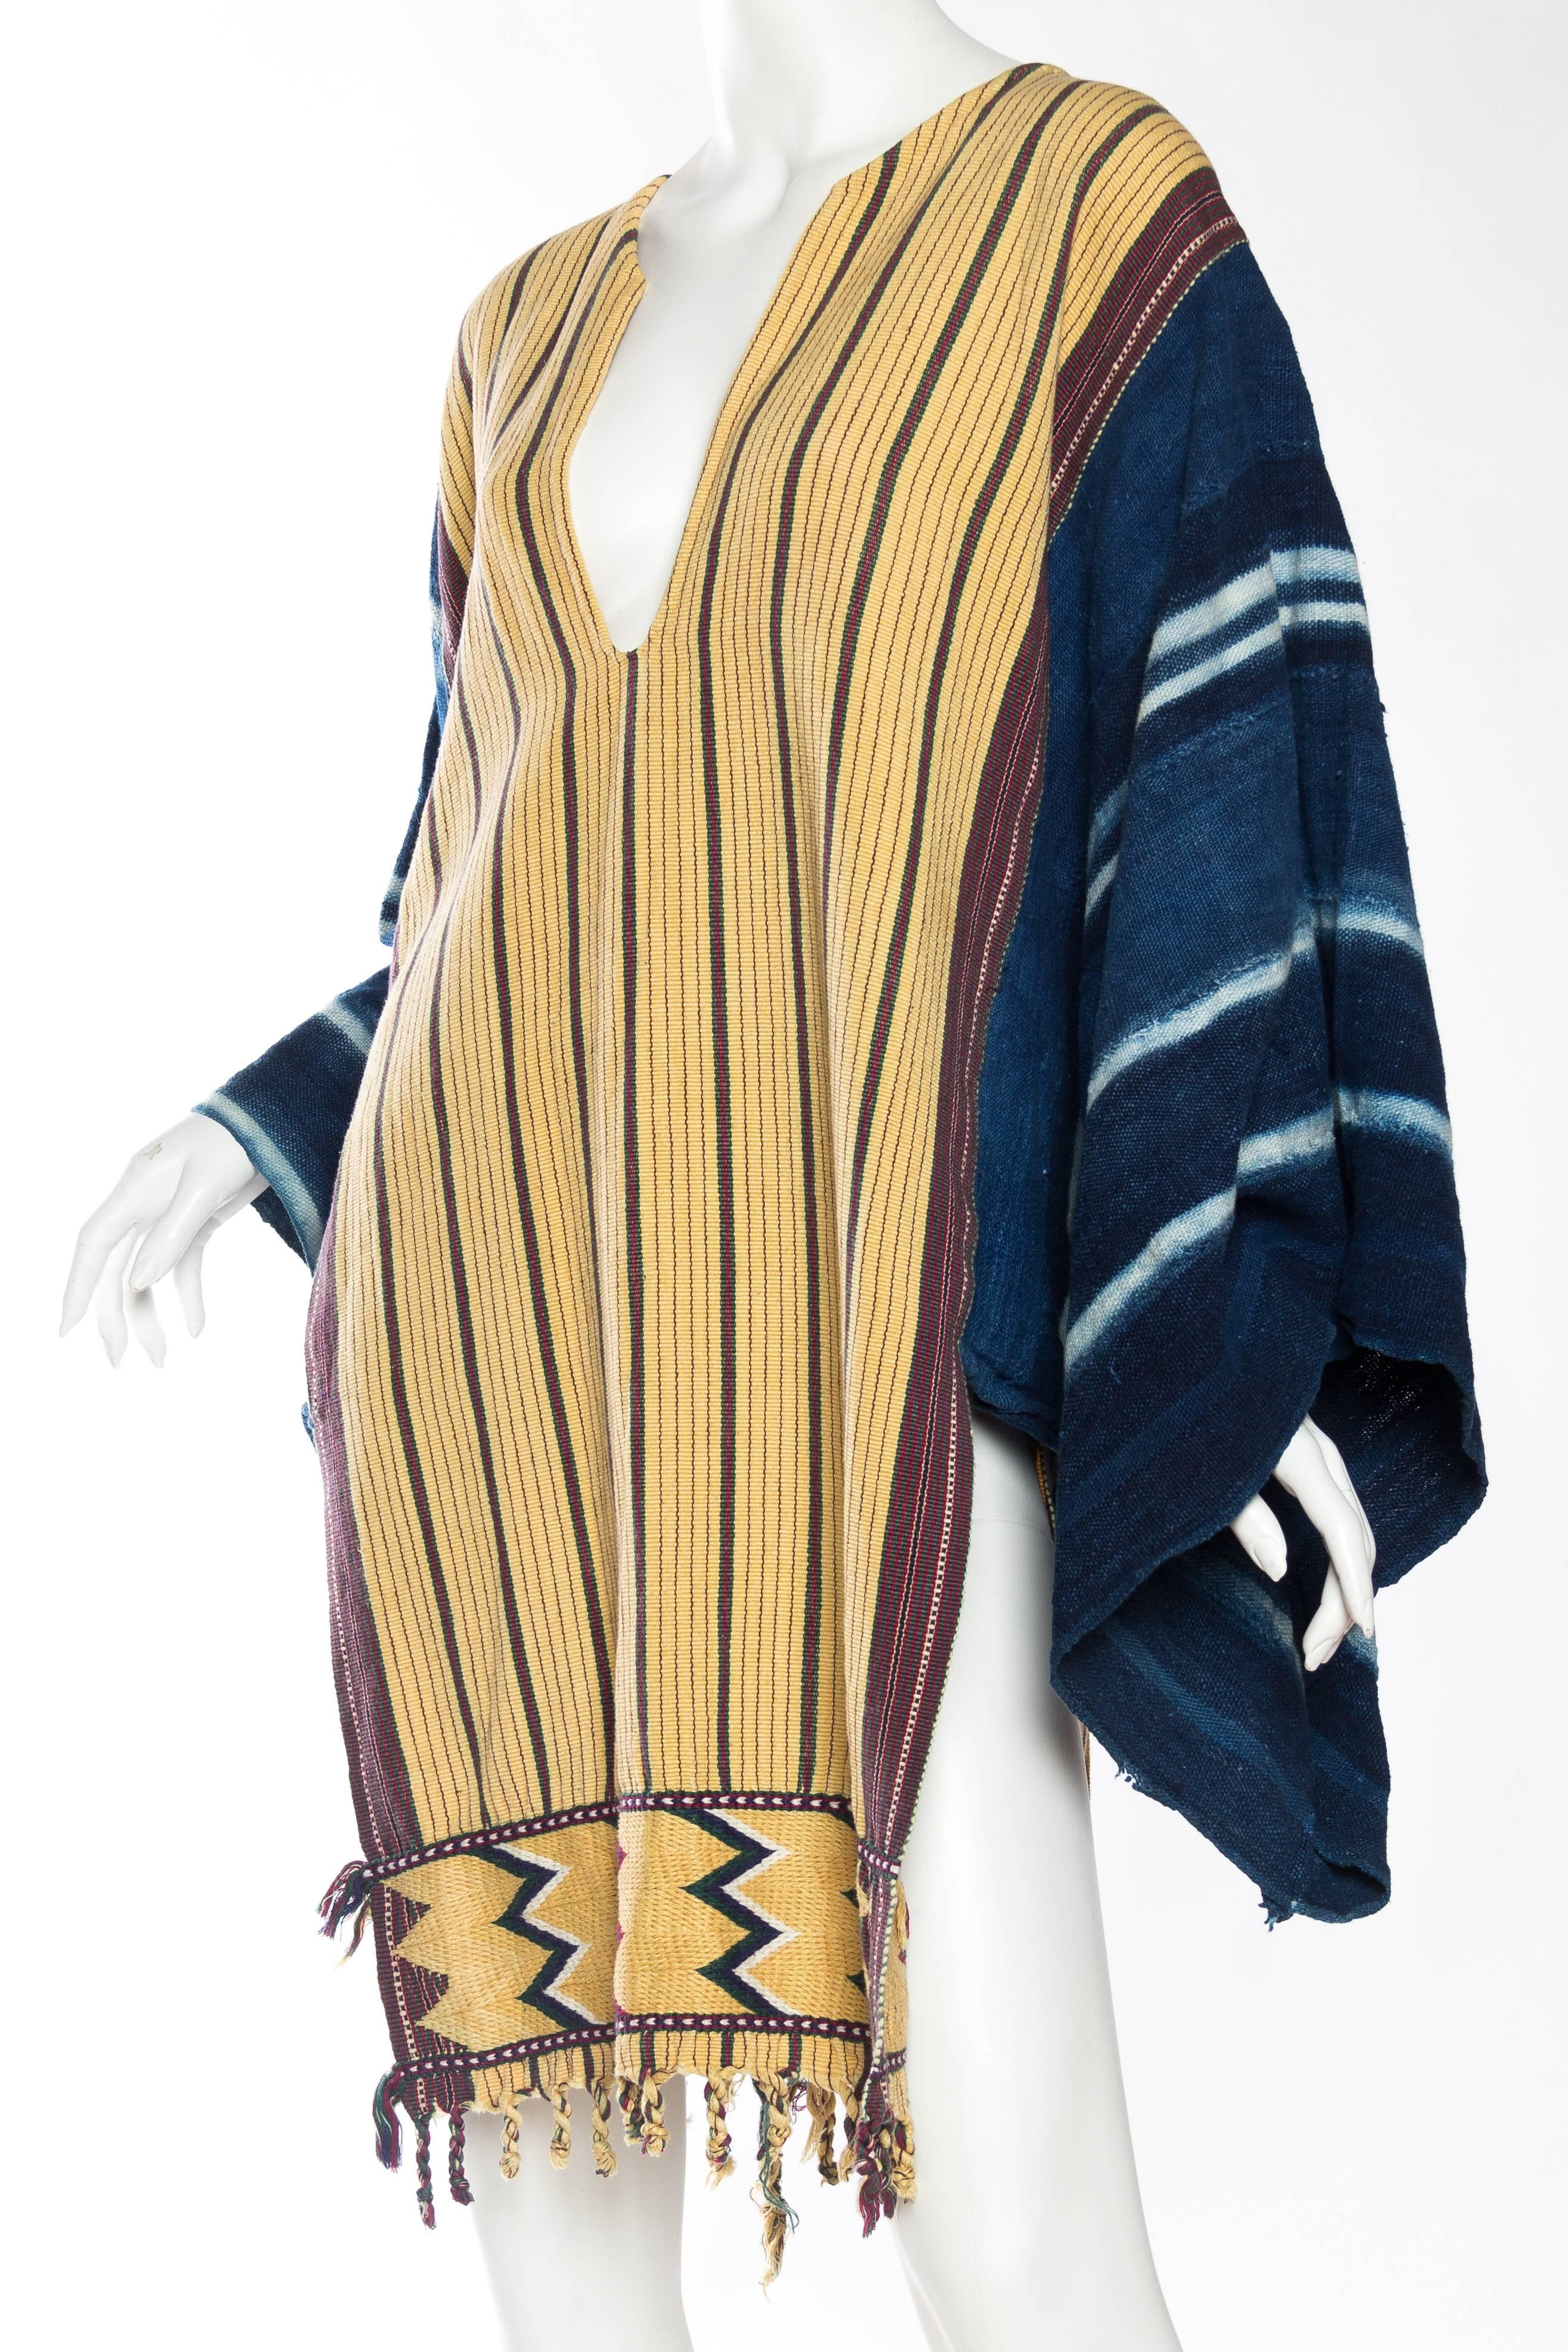 Women's or Men's Handwoven Ethnic Tunic Dress For Sale